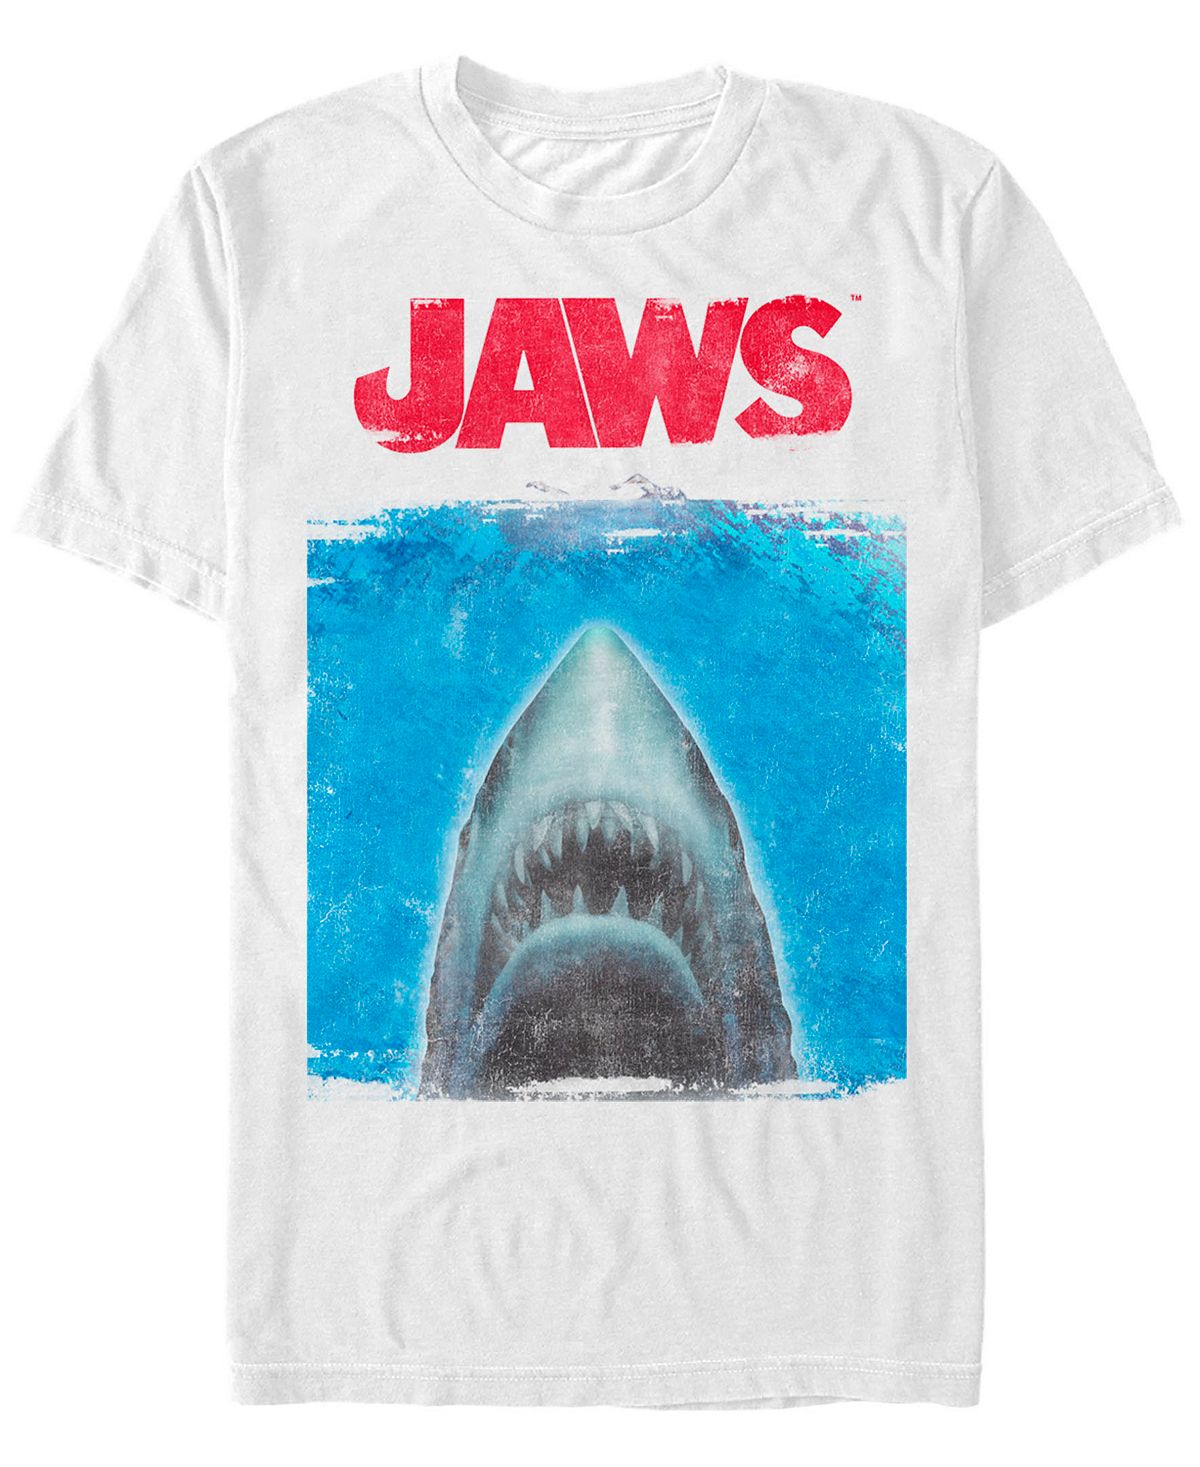 Мужская футболка с короткими рукавами с изображением акулы «челюсти» Fifth Sun, белый jaws classic original movie poster retro 70 s vintage graphic t shirt uni726